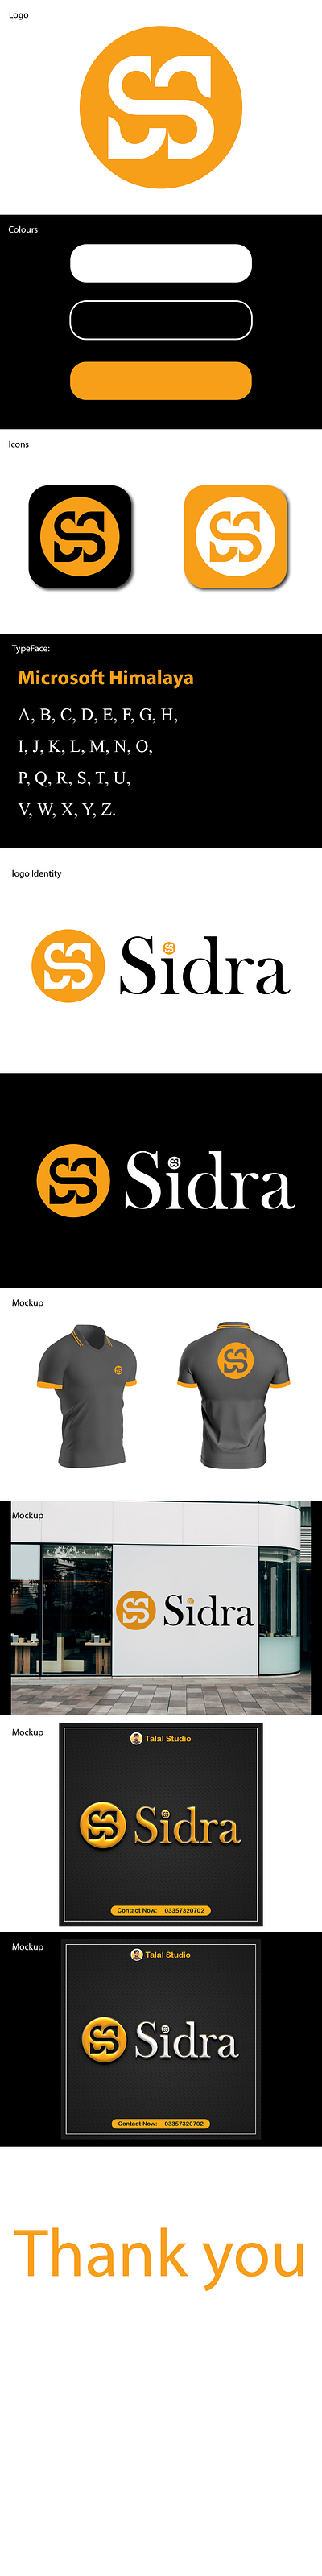 Logo Design - Brand Identity - Sidra Logo Design - Fashion logo branding identity design. logo